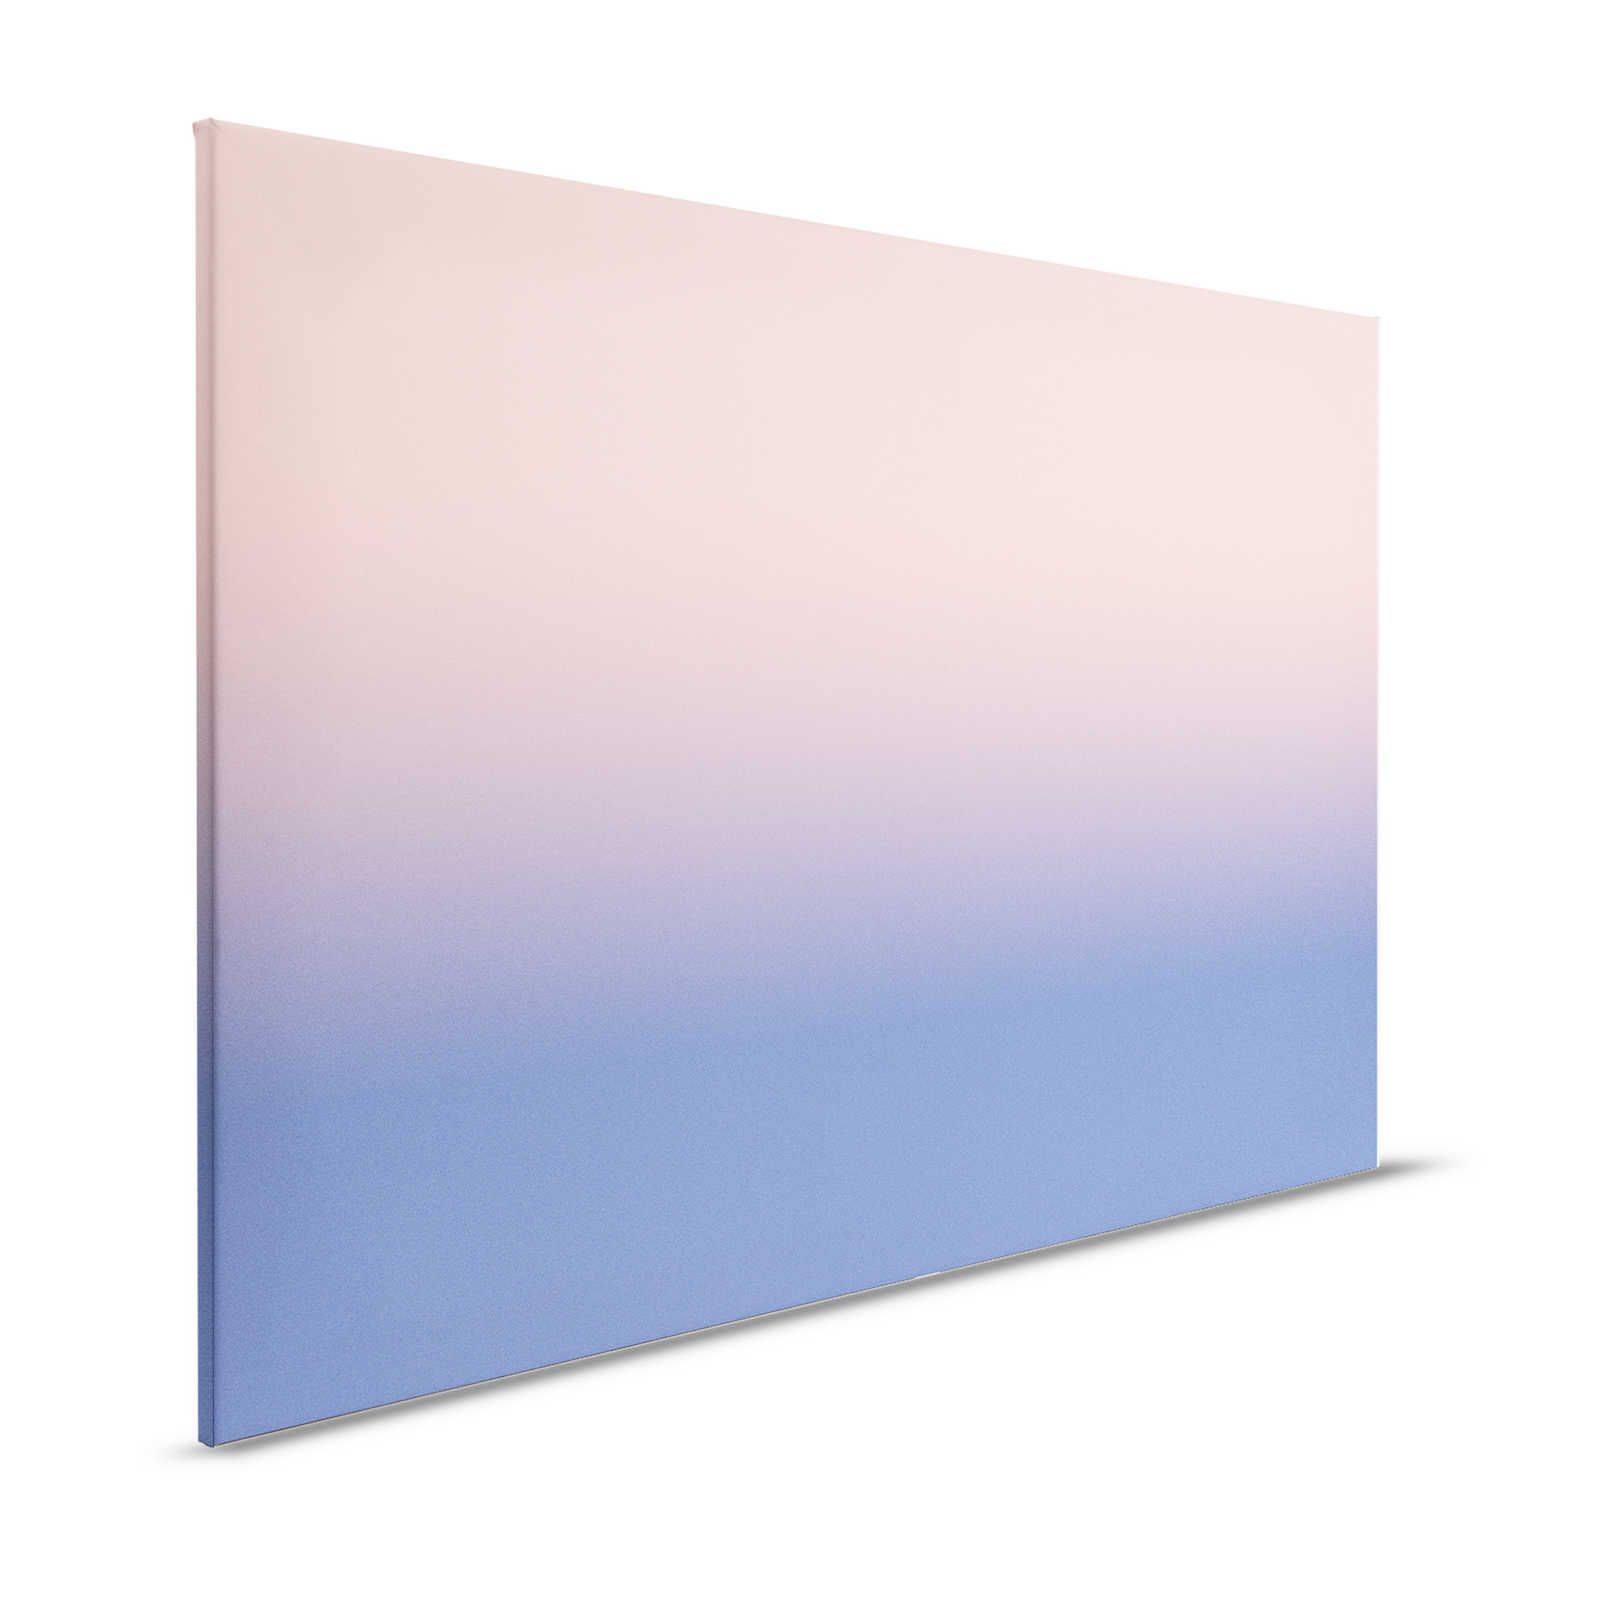 Colour Studio 2 - Ombre Leinwandbild Rosa & Lila für Mädchenzimmer – 1,20 m x 0,80 m
